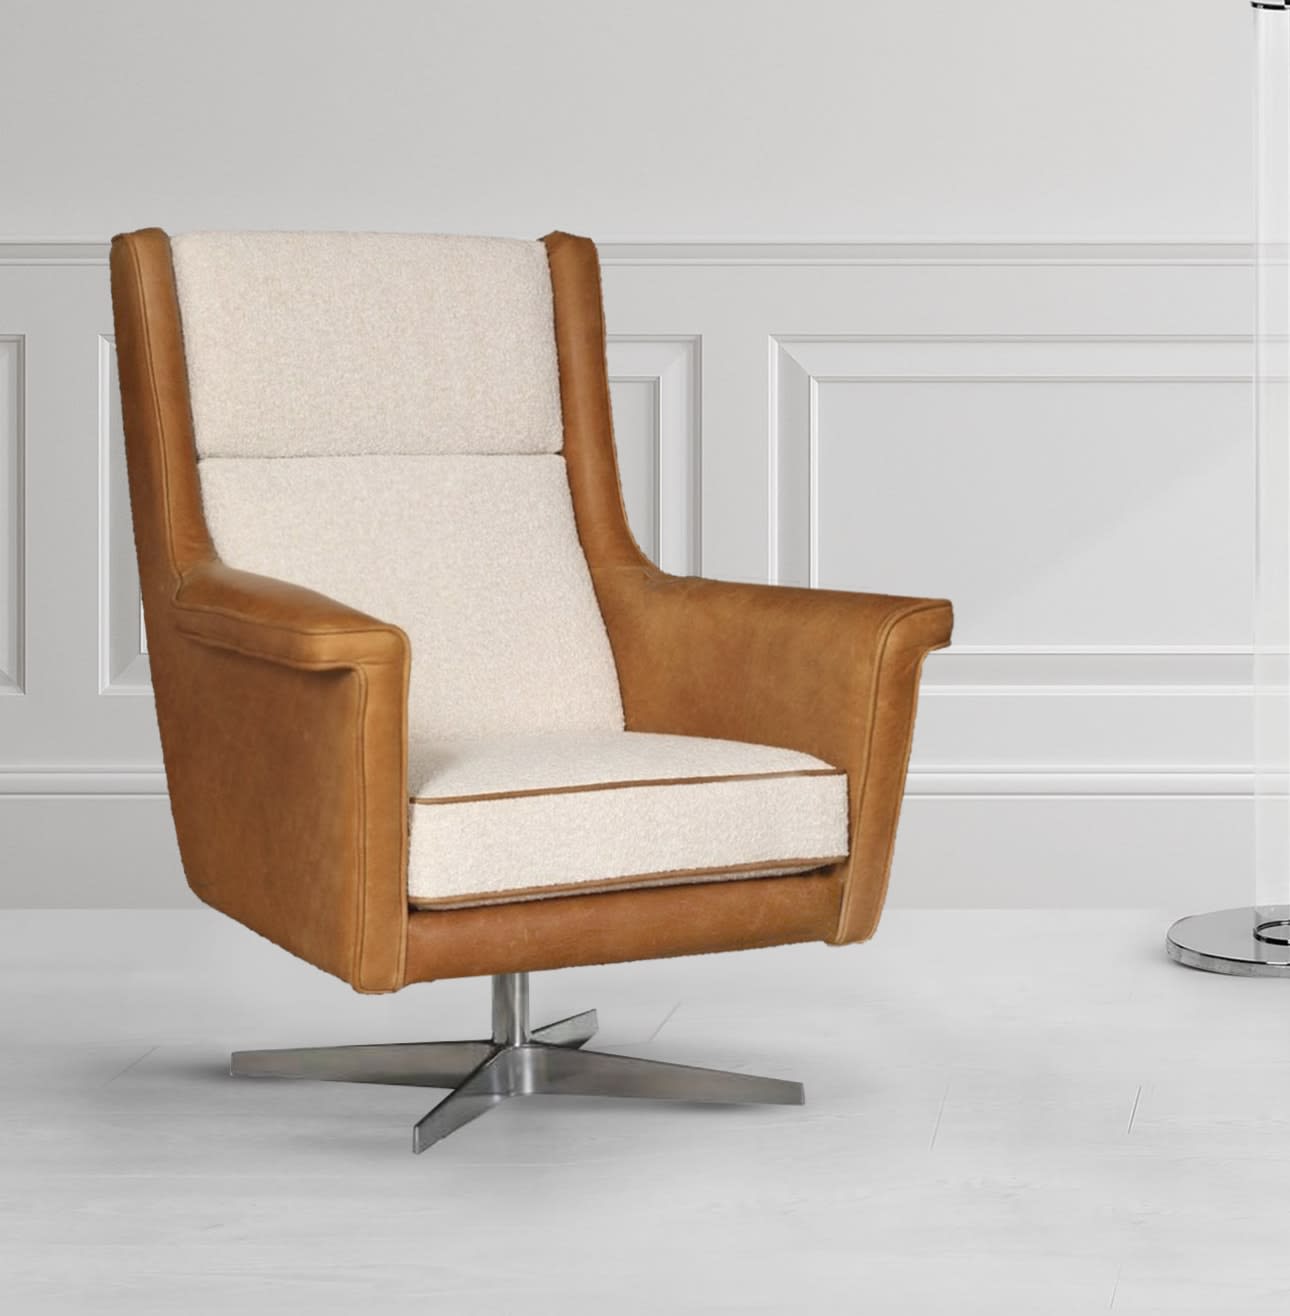 2 Tone Vintage Style Swivel Chair